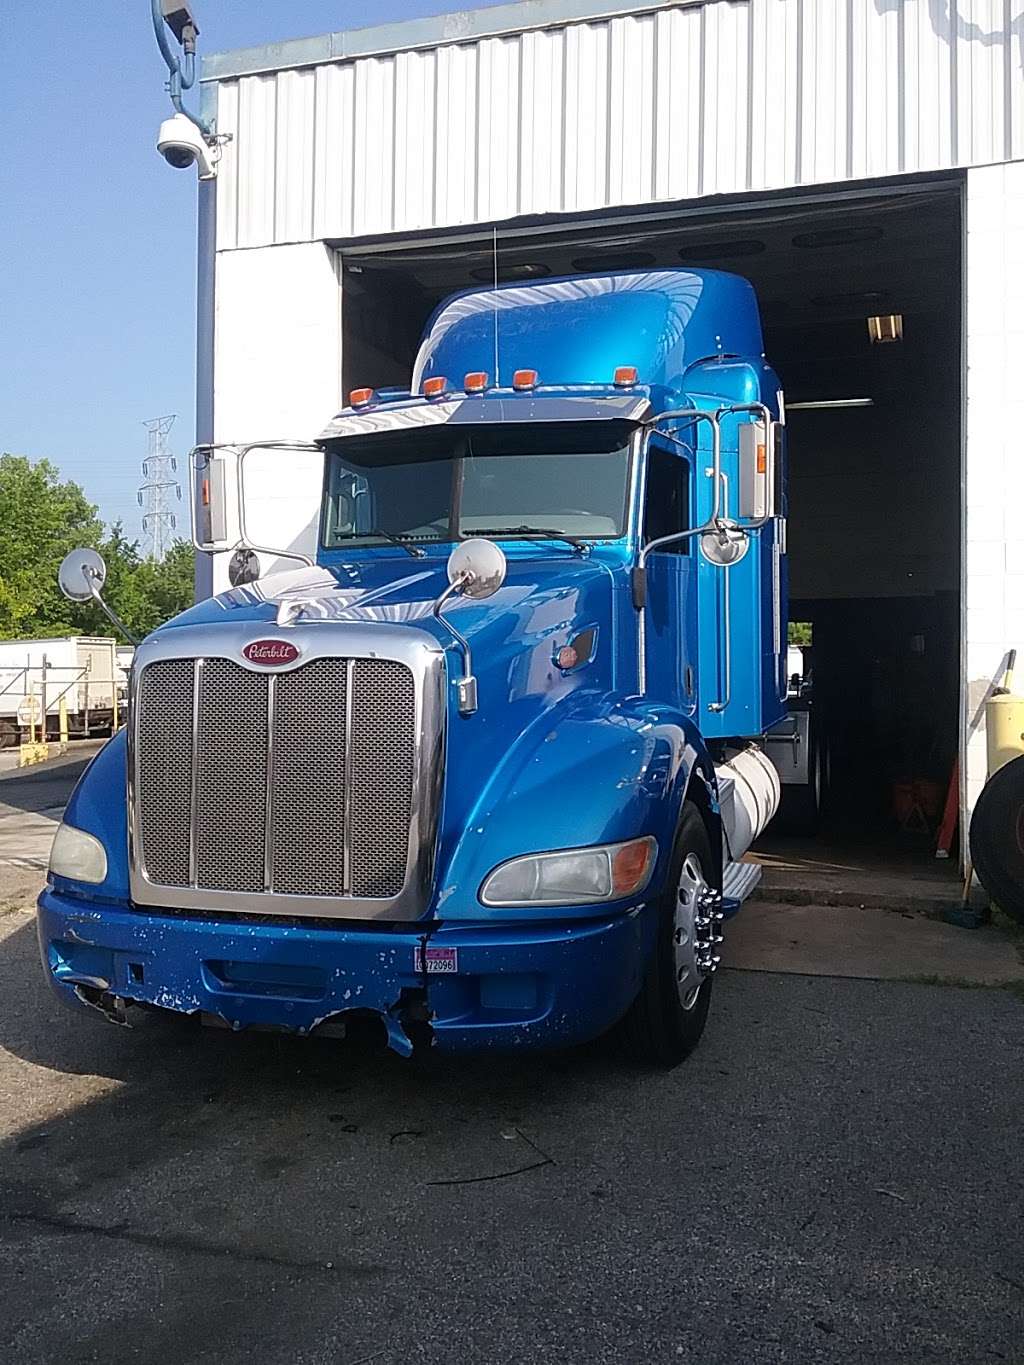 Chesapeake Truck | 8540 Pulaski Hwy, Baltimore, MD 21237, USA | Phone: (410) 682-4000